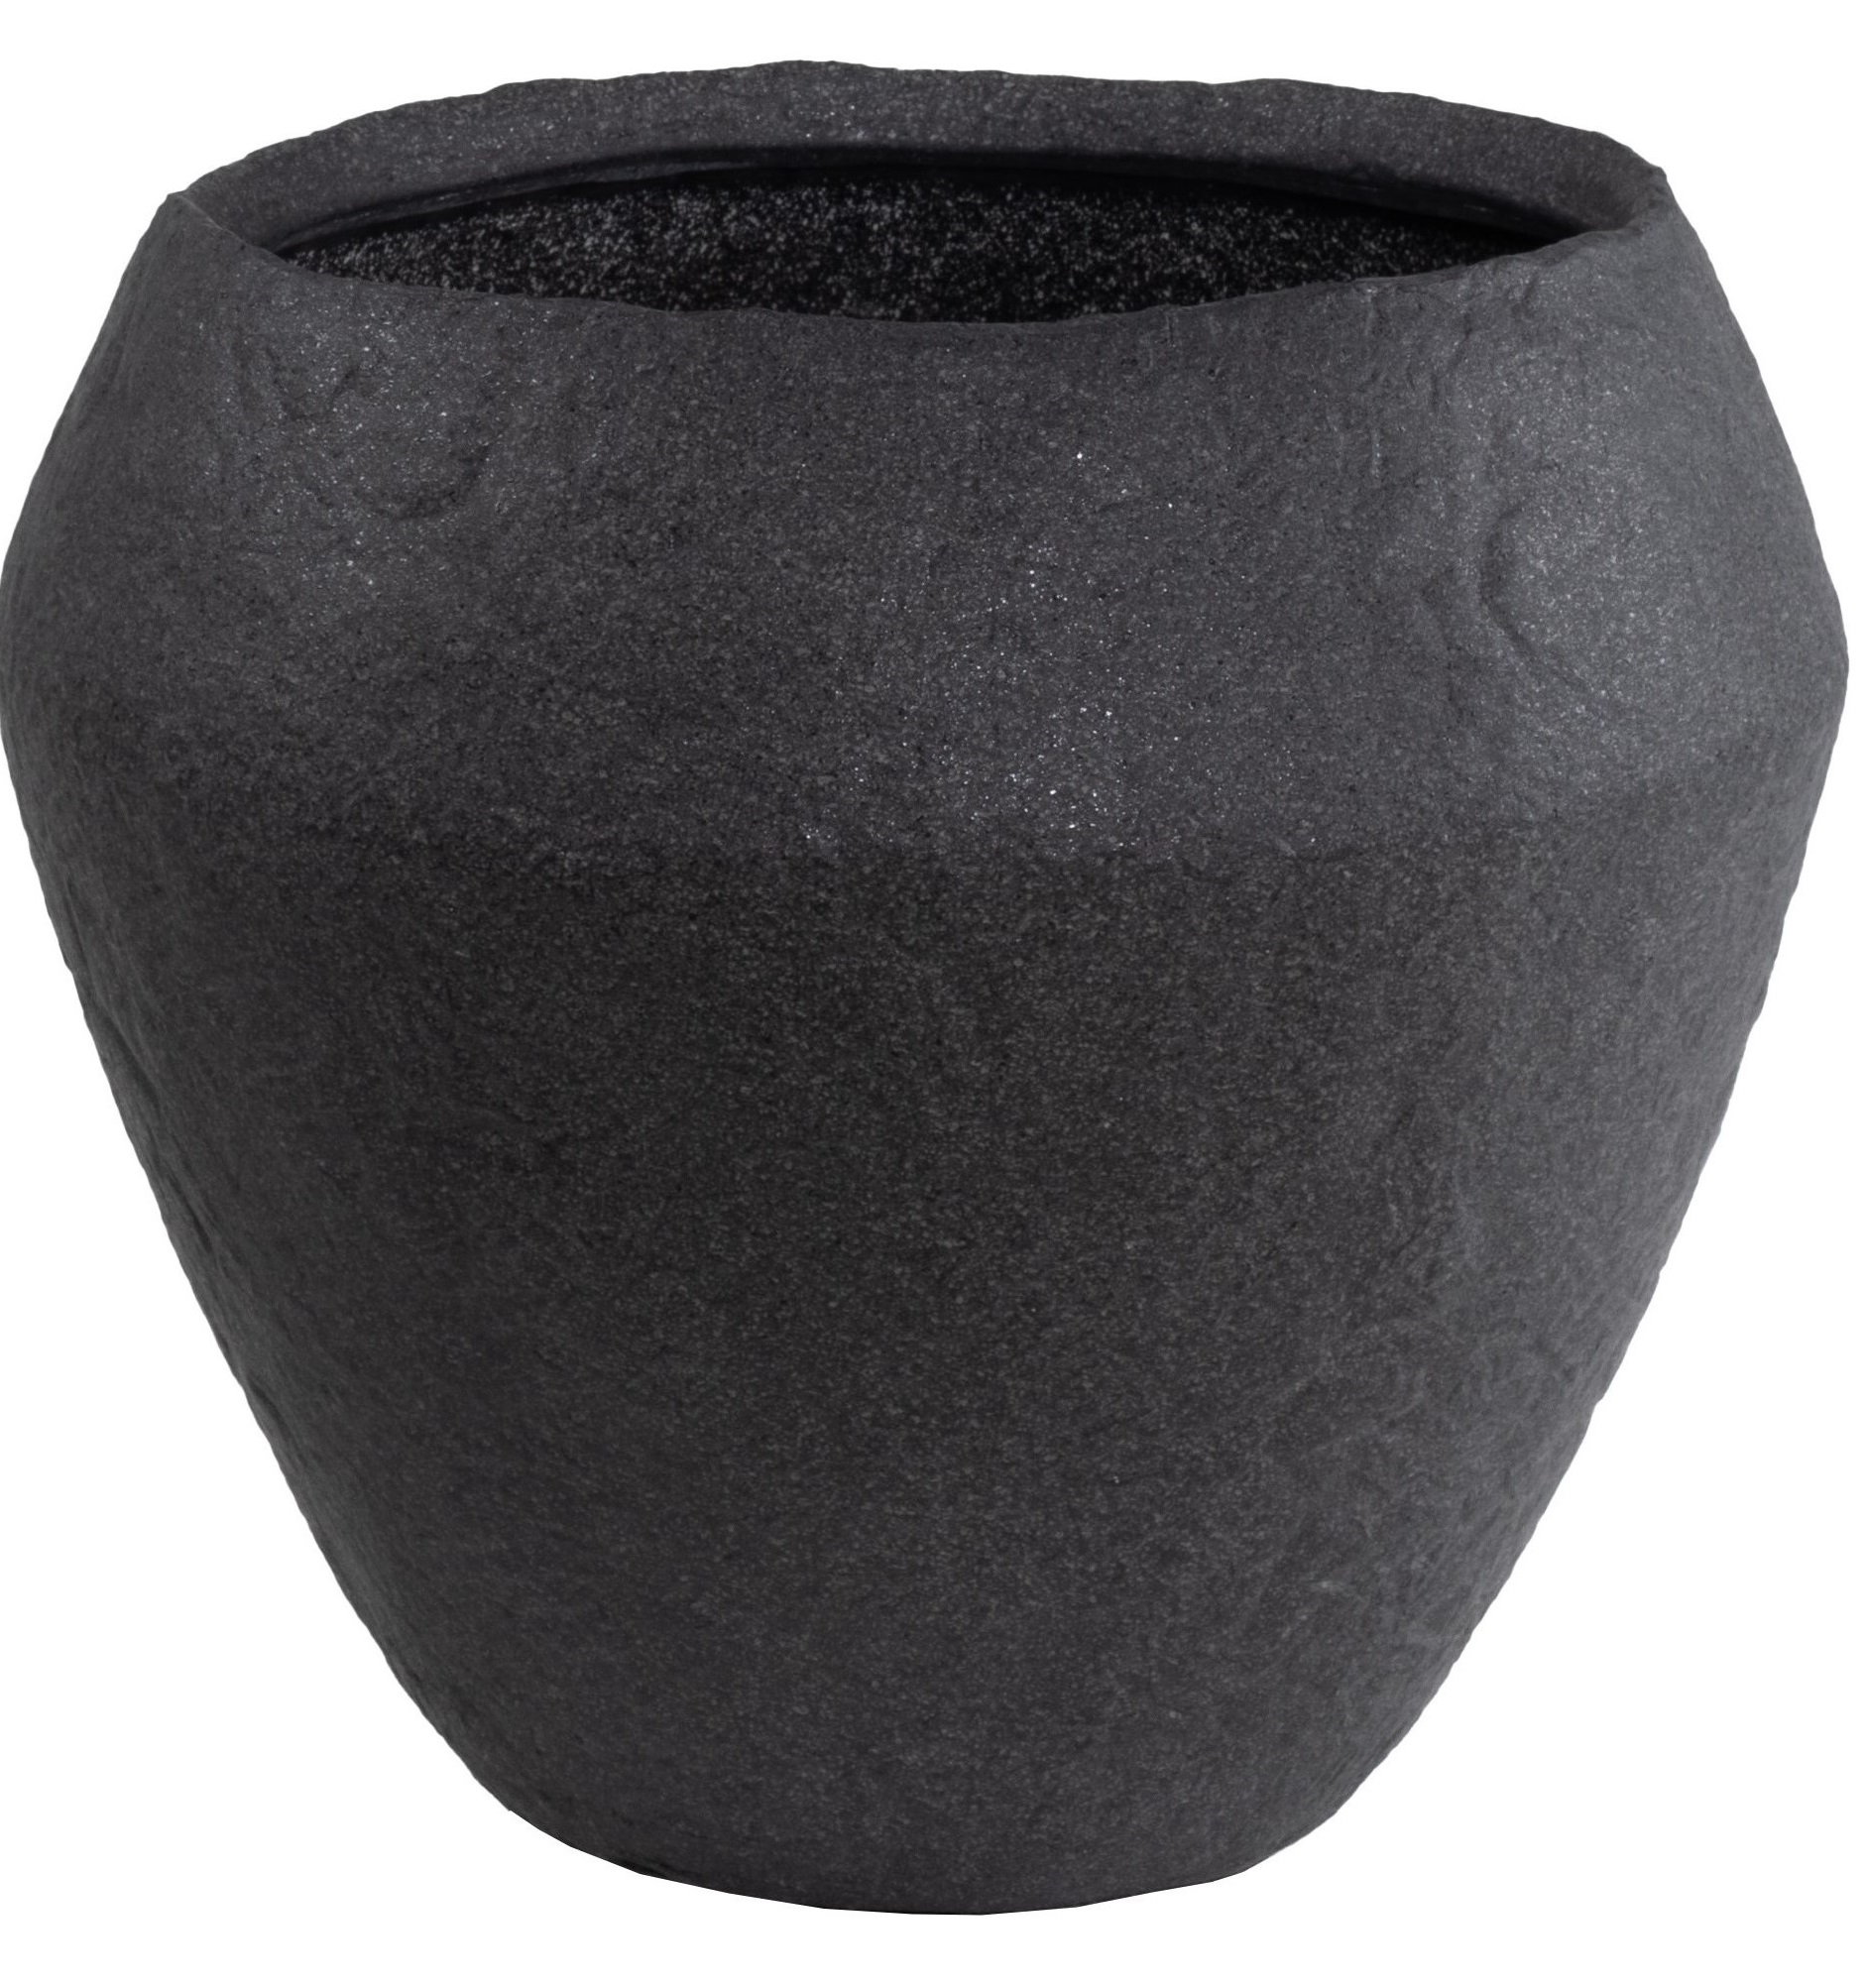 Organic cachepot B – spotted black